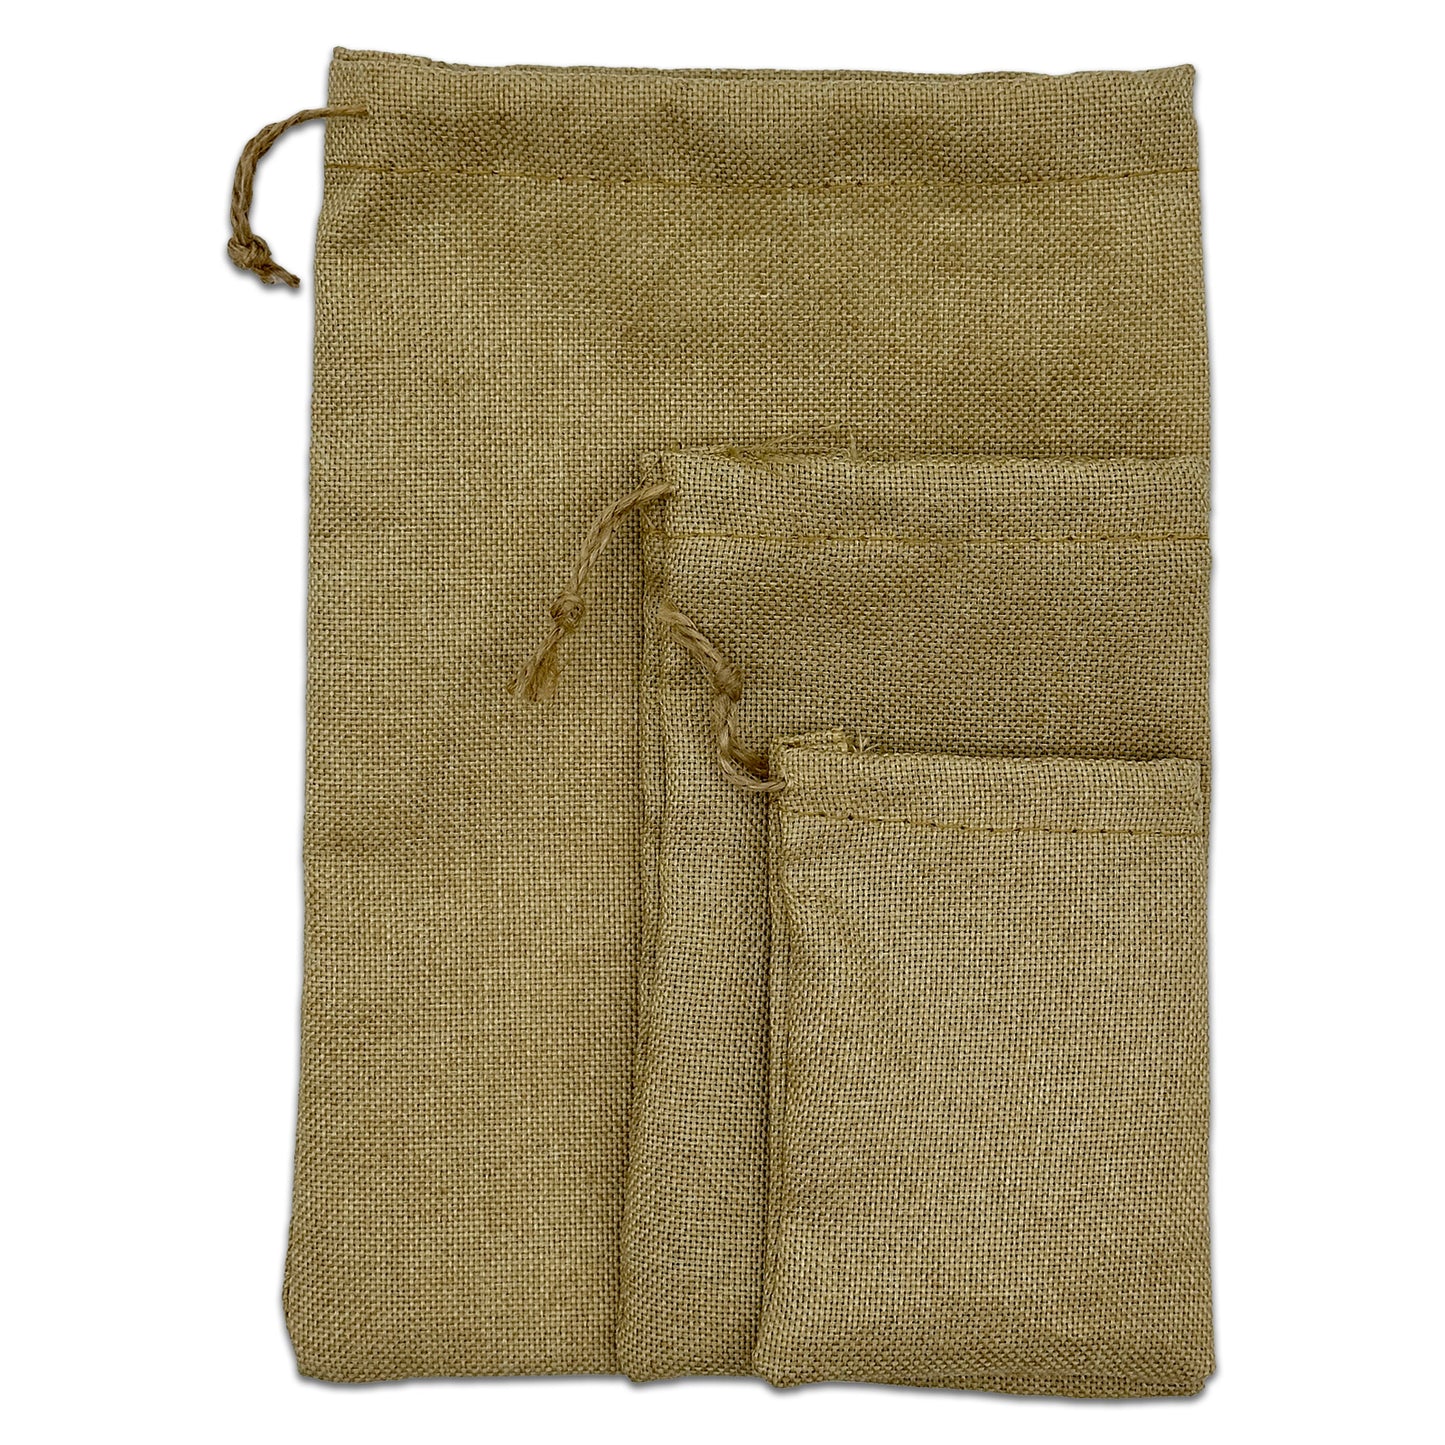 5 3/4" x 7 3/4" Linen Burlap Drawstring Gift Bag Pouches